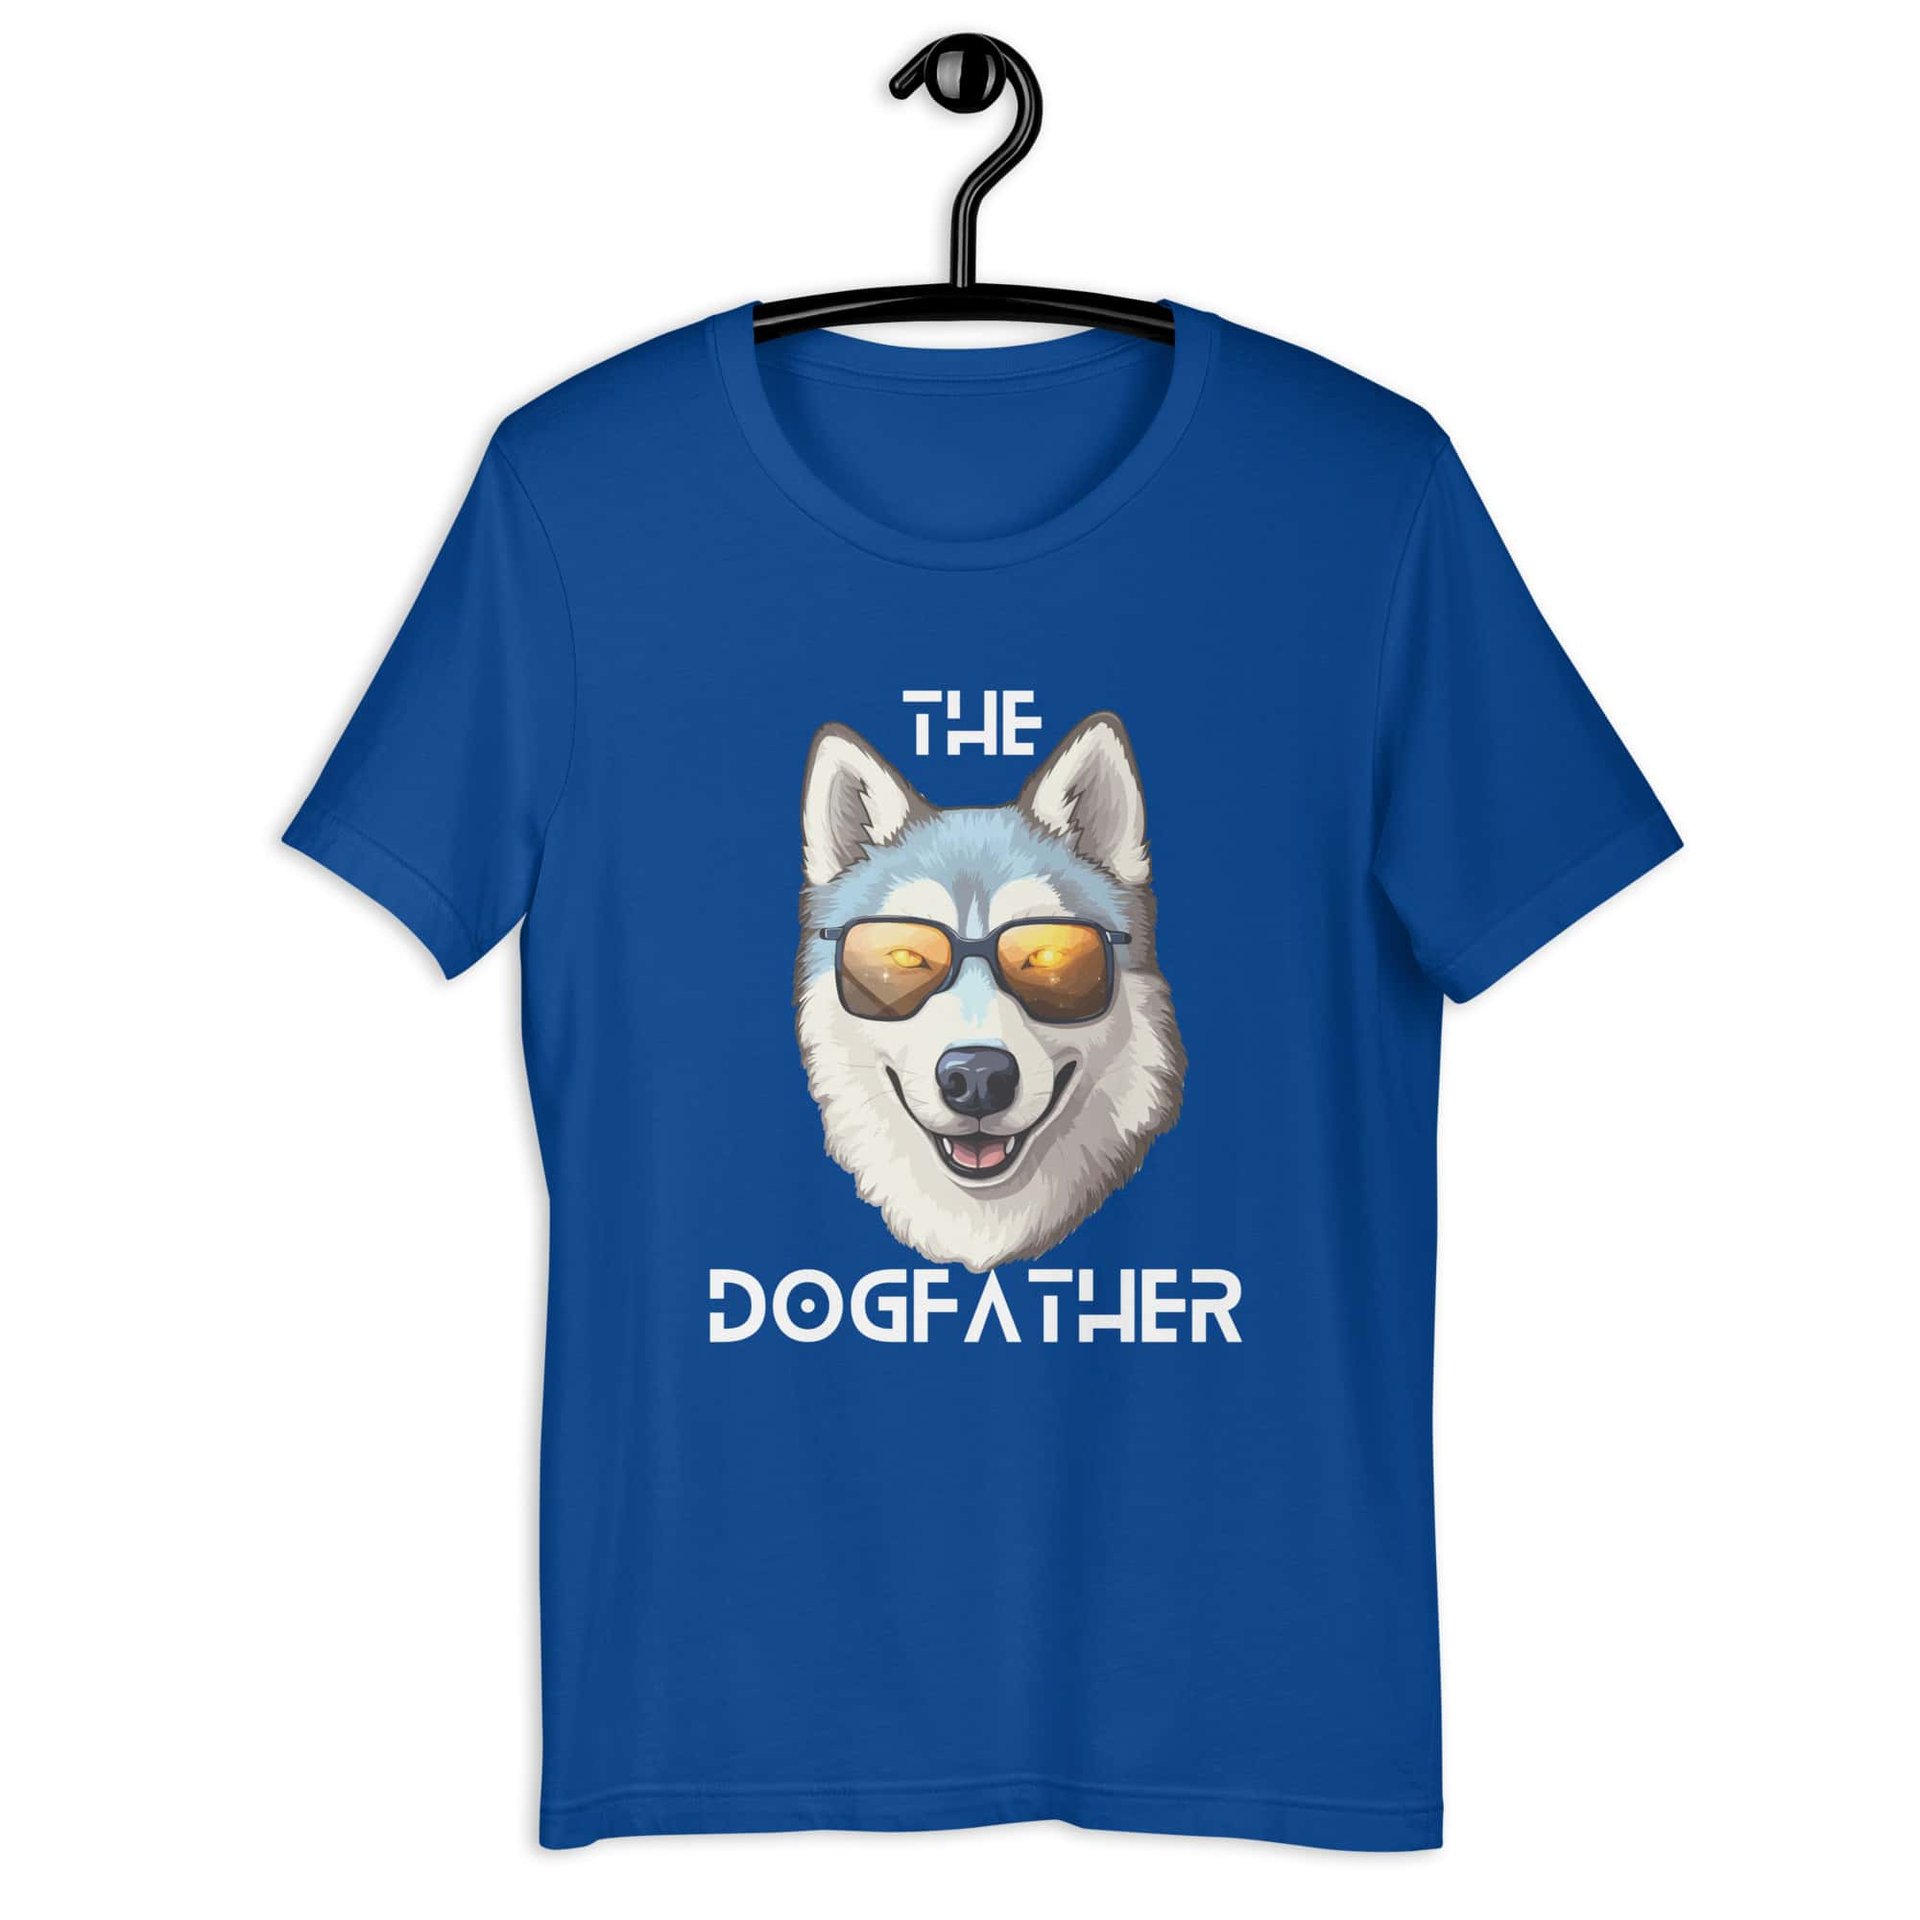 The Dogfather Huskies Unisex T-Shirt. Royal blue